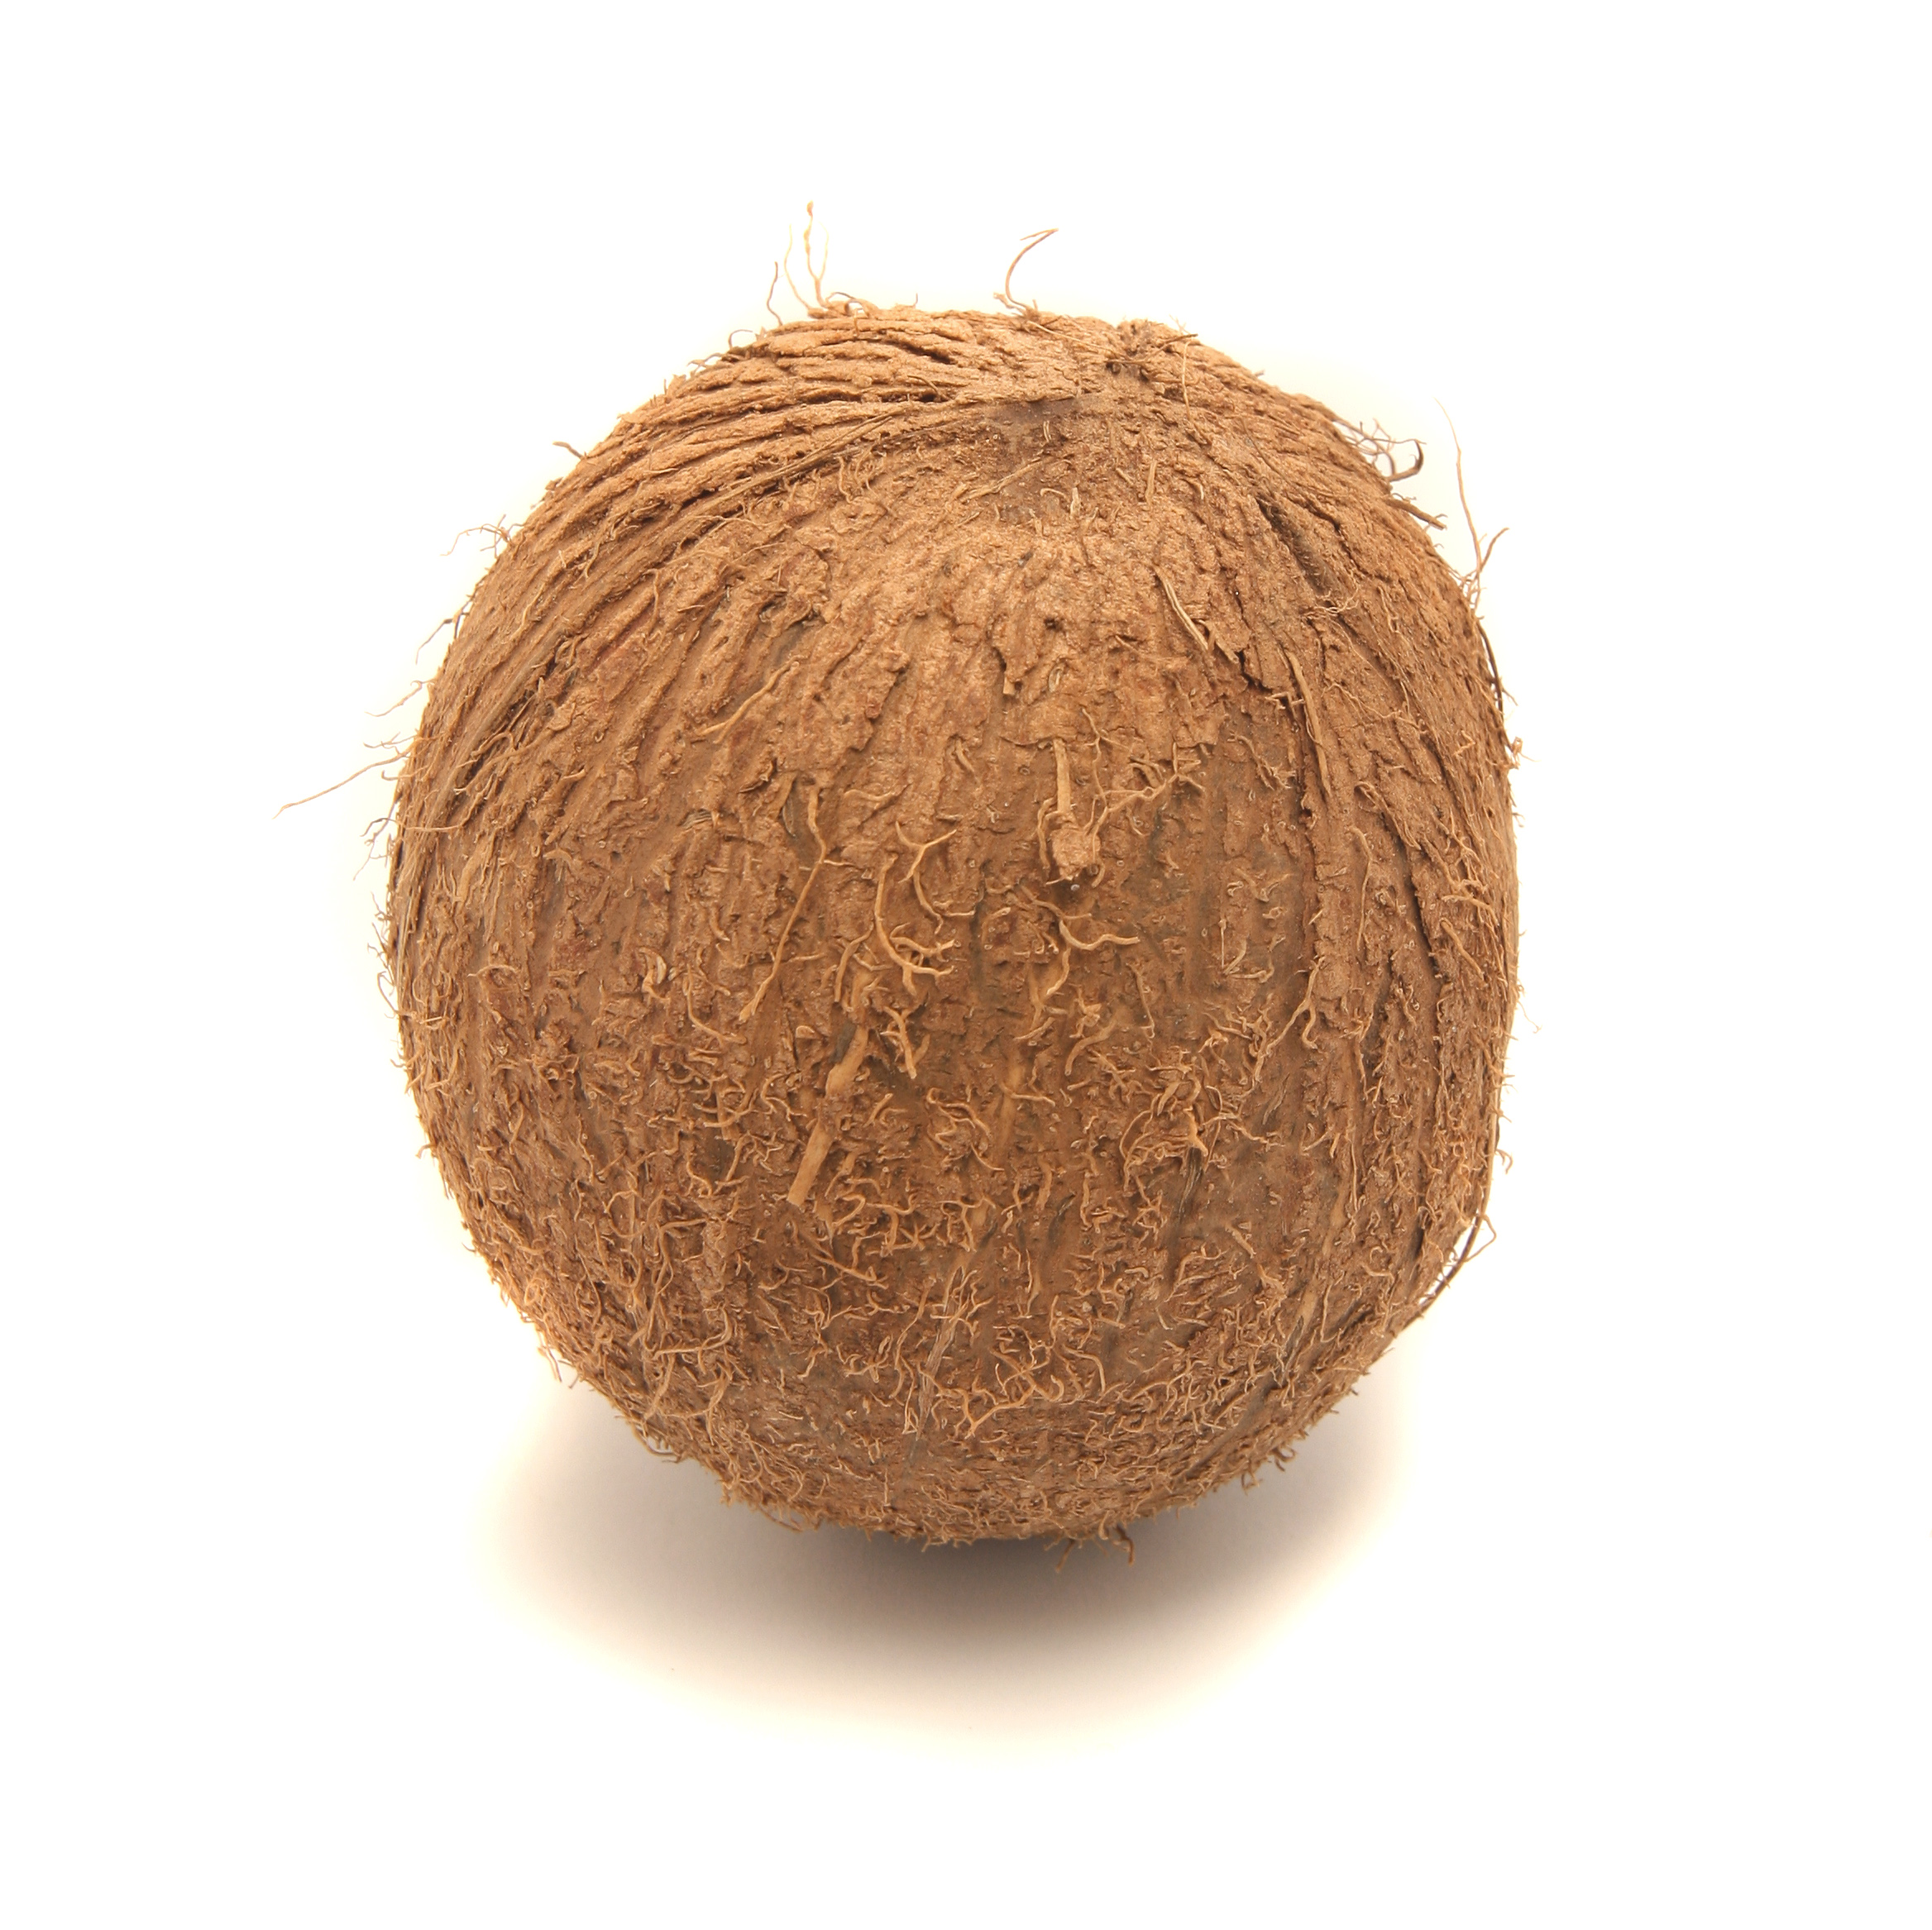 coconut-and-heart-disease.jpg